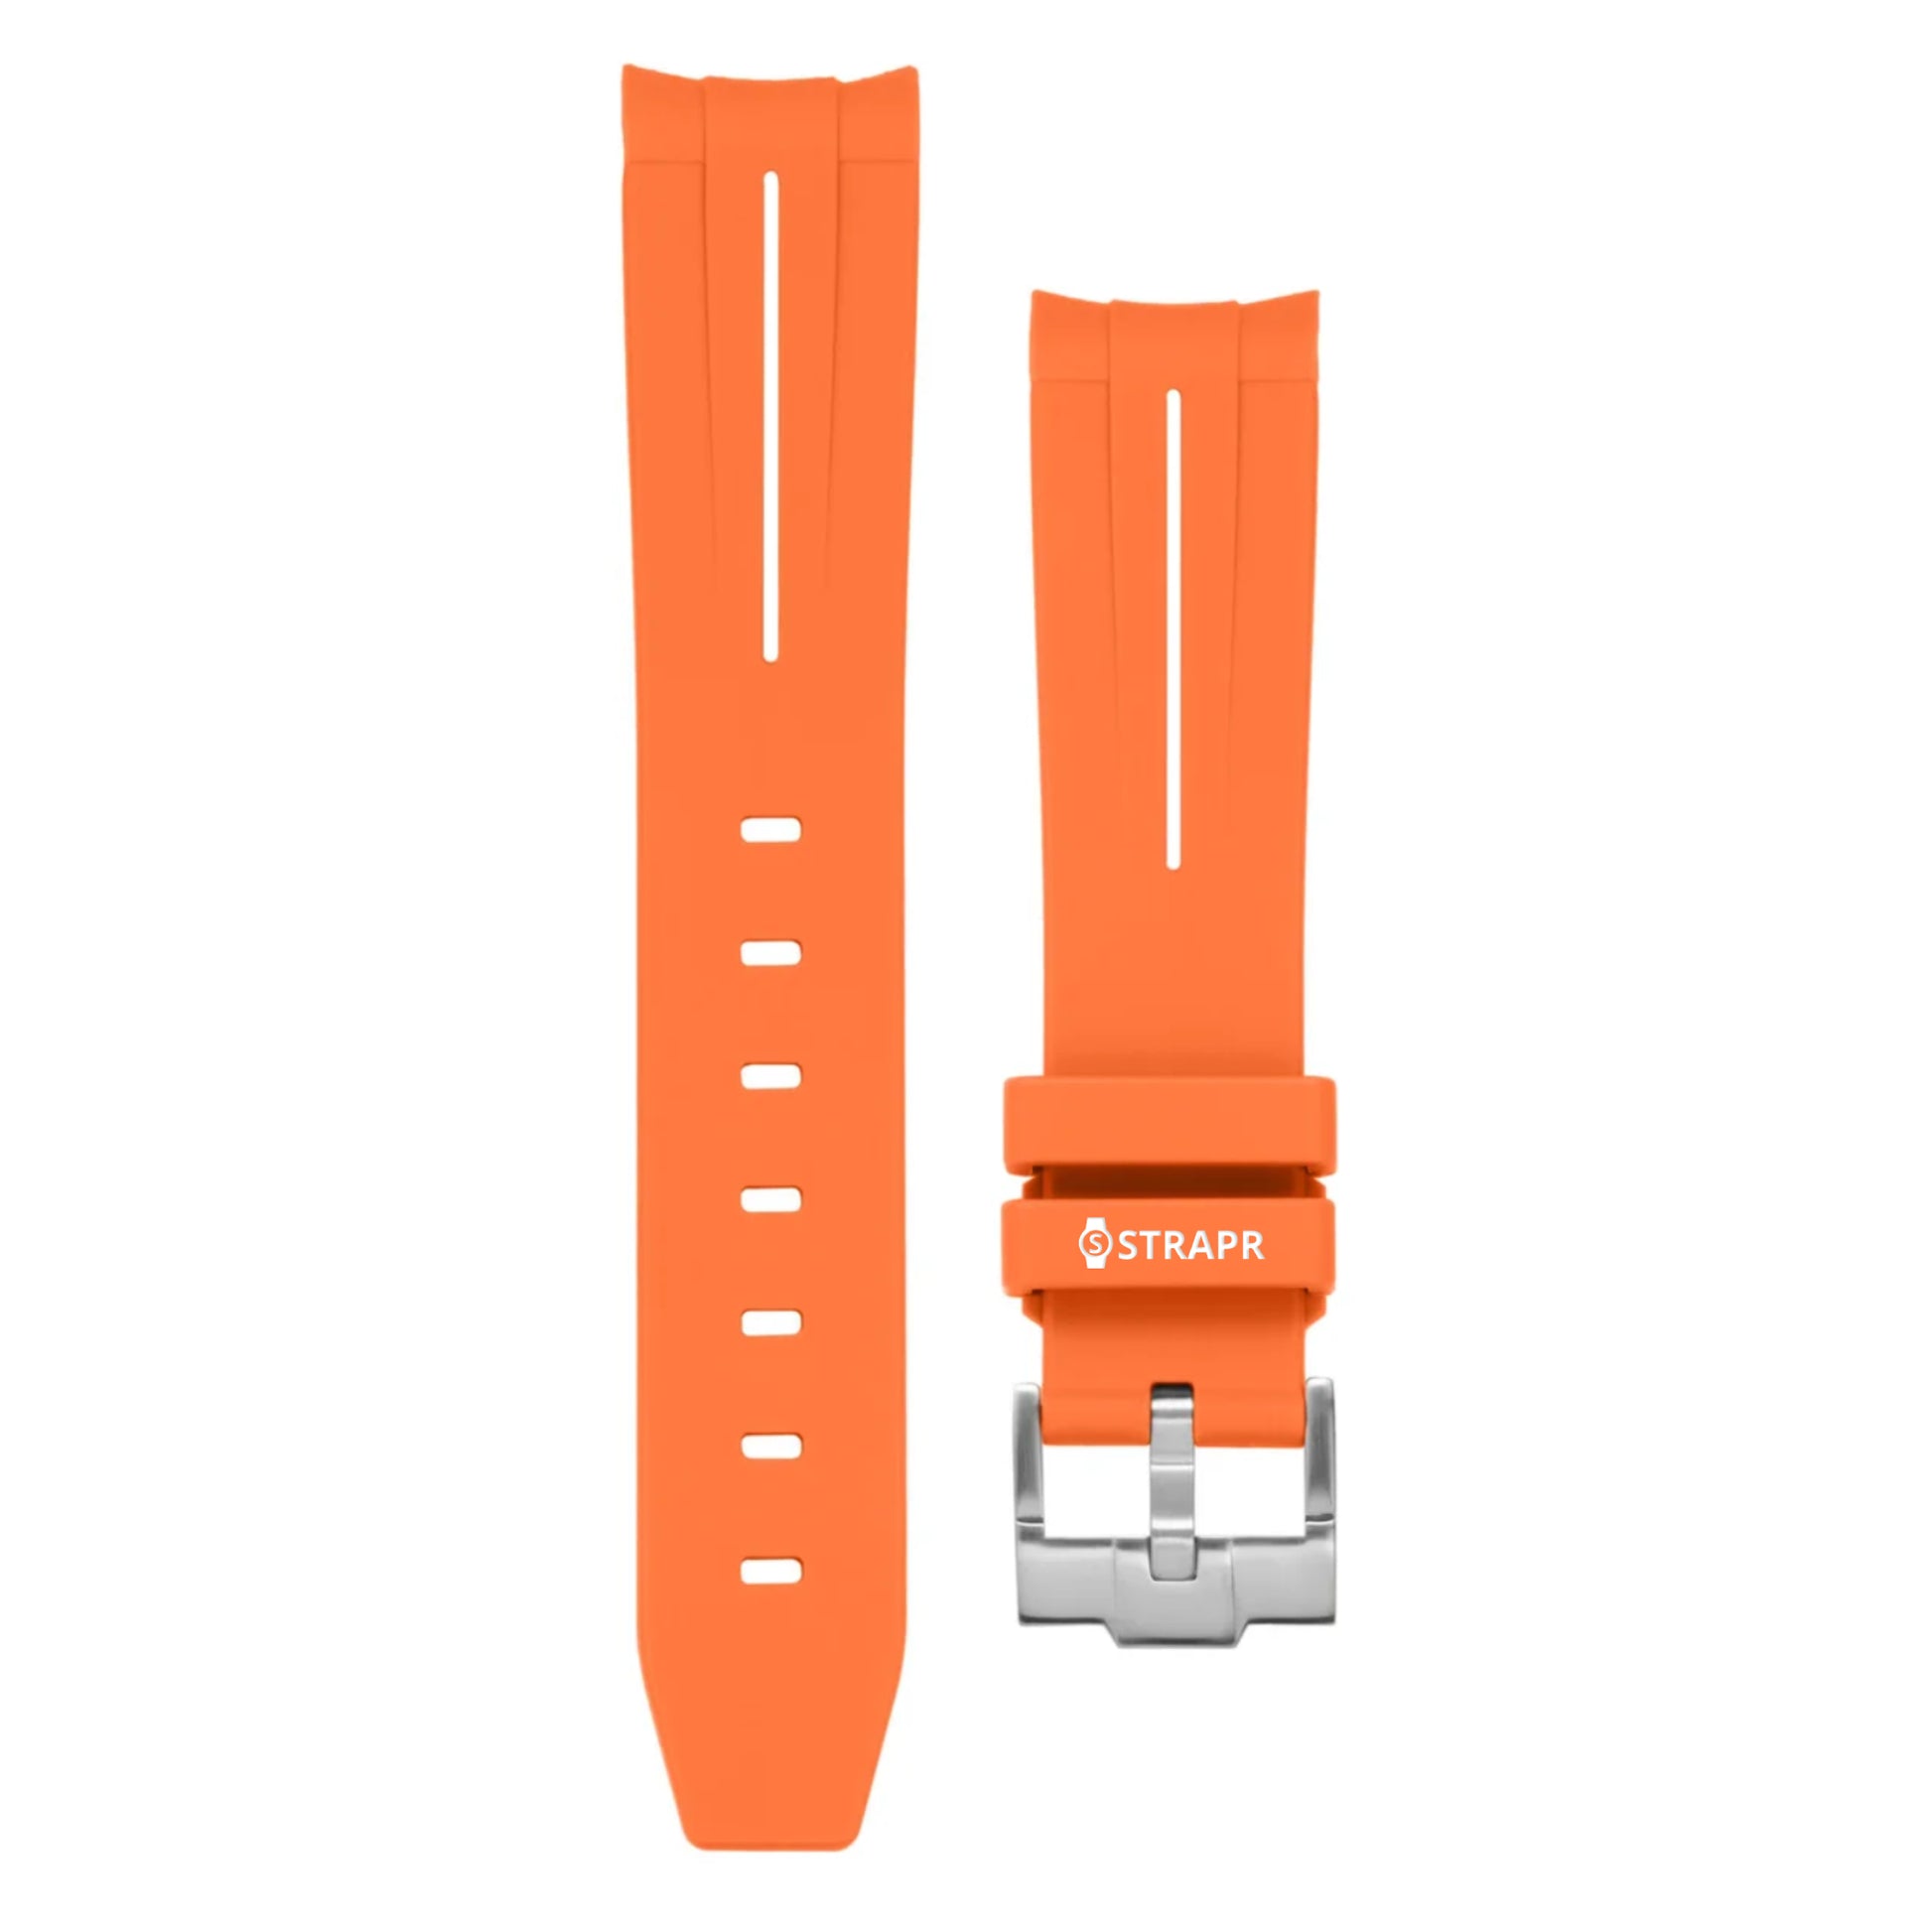 MoonSwatch strap orange and white